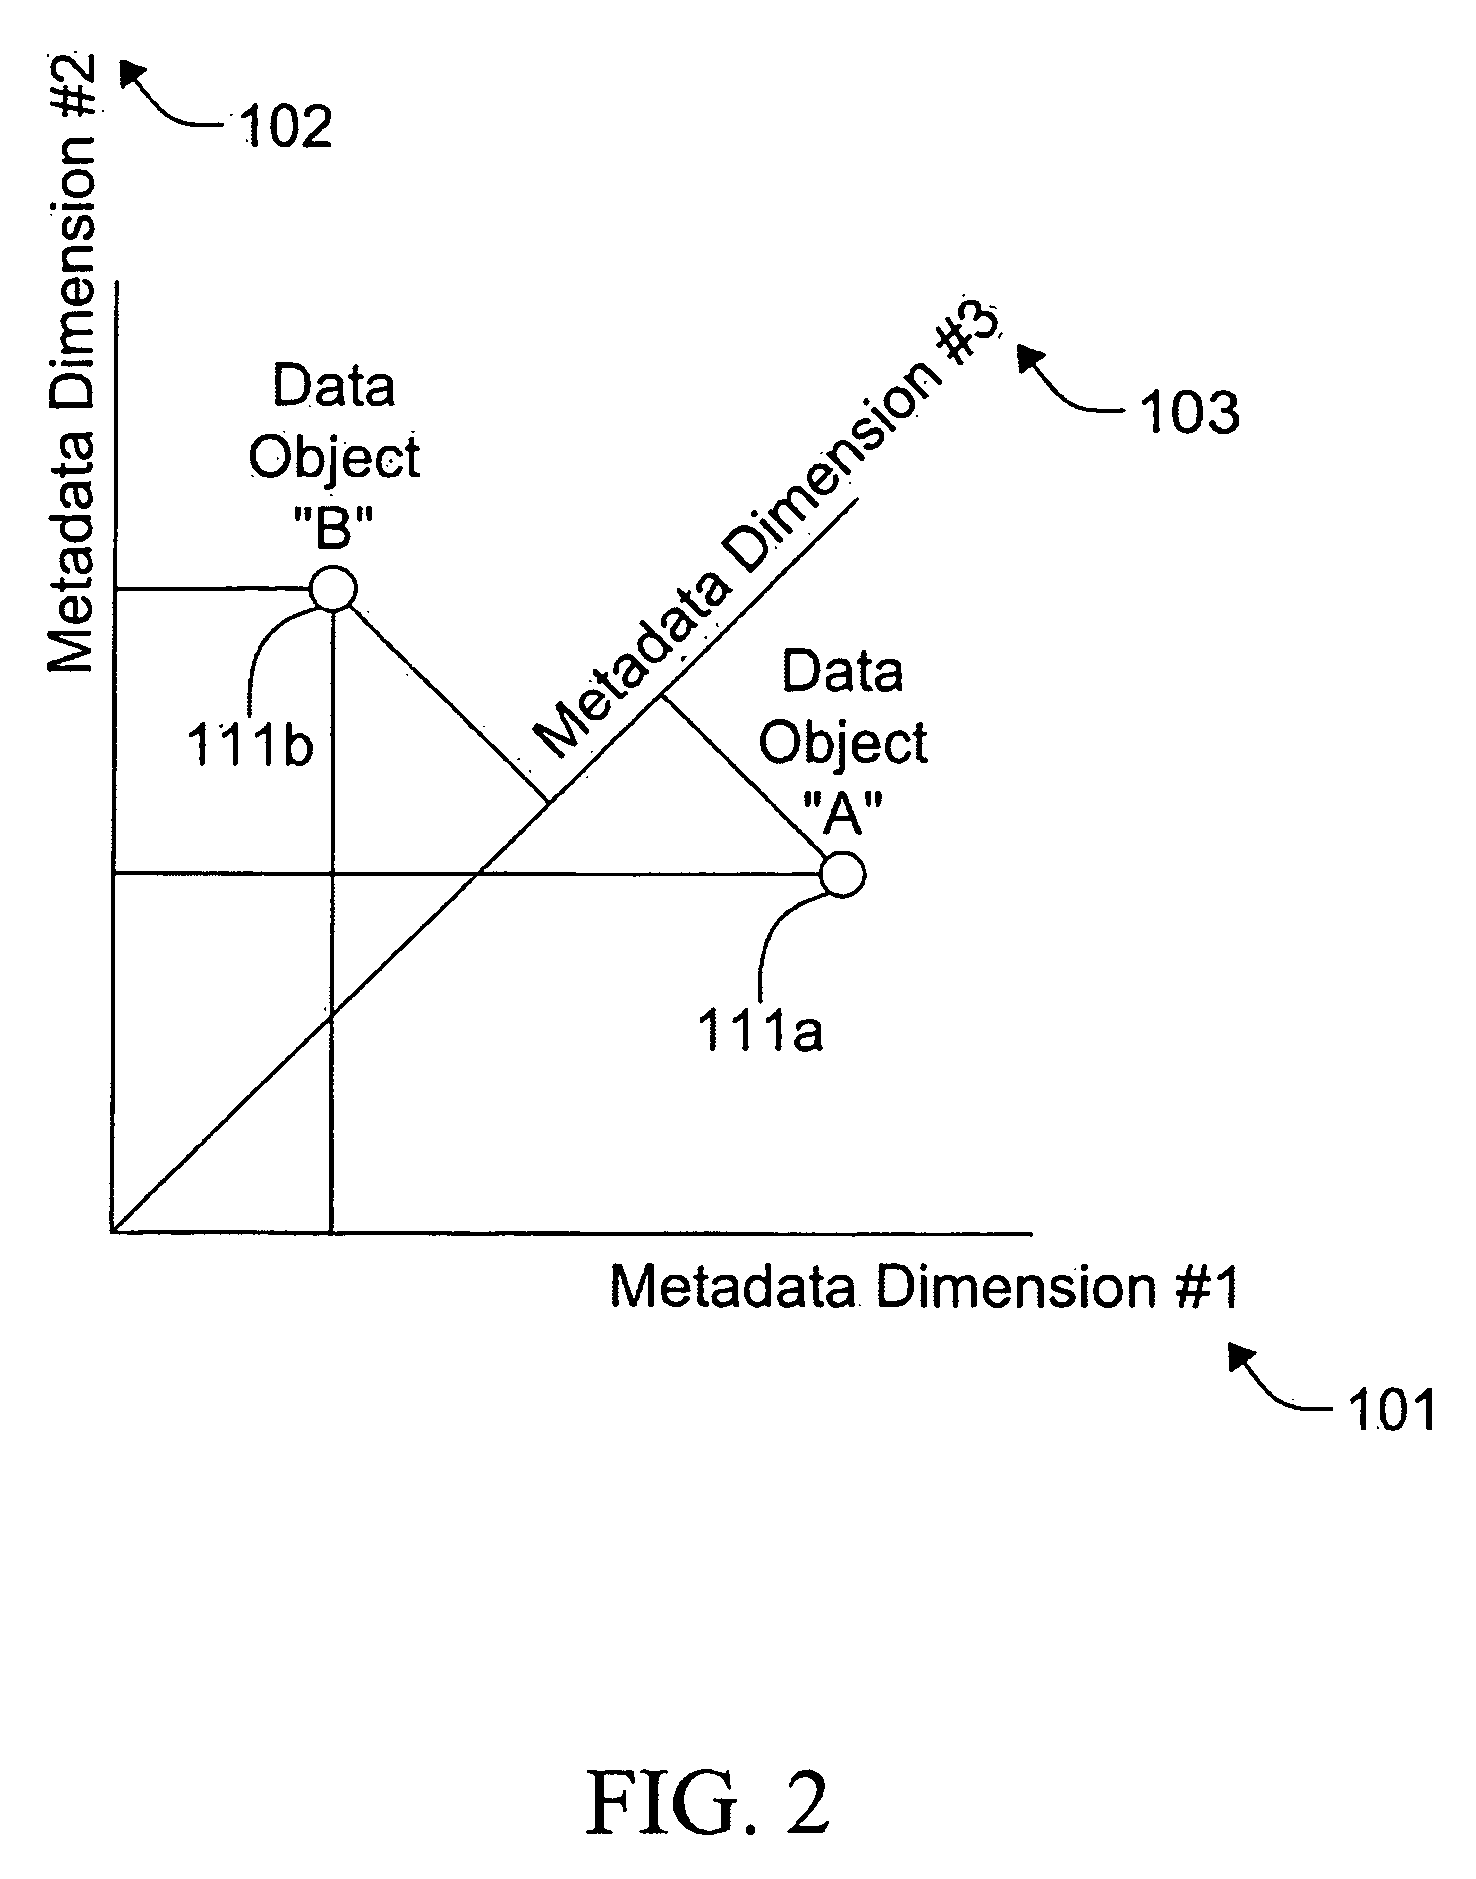 Multi-dimensional metadata in research recordkeeping